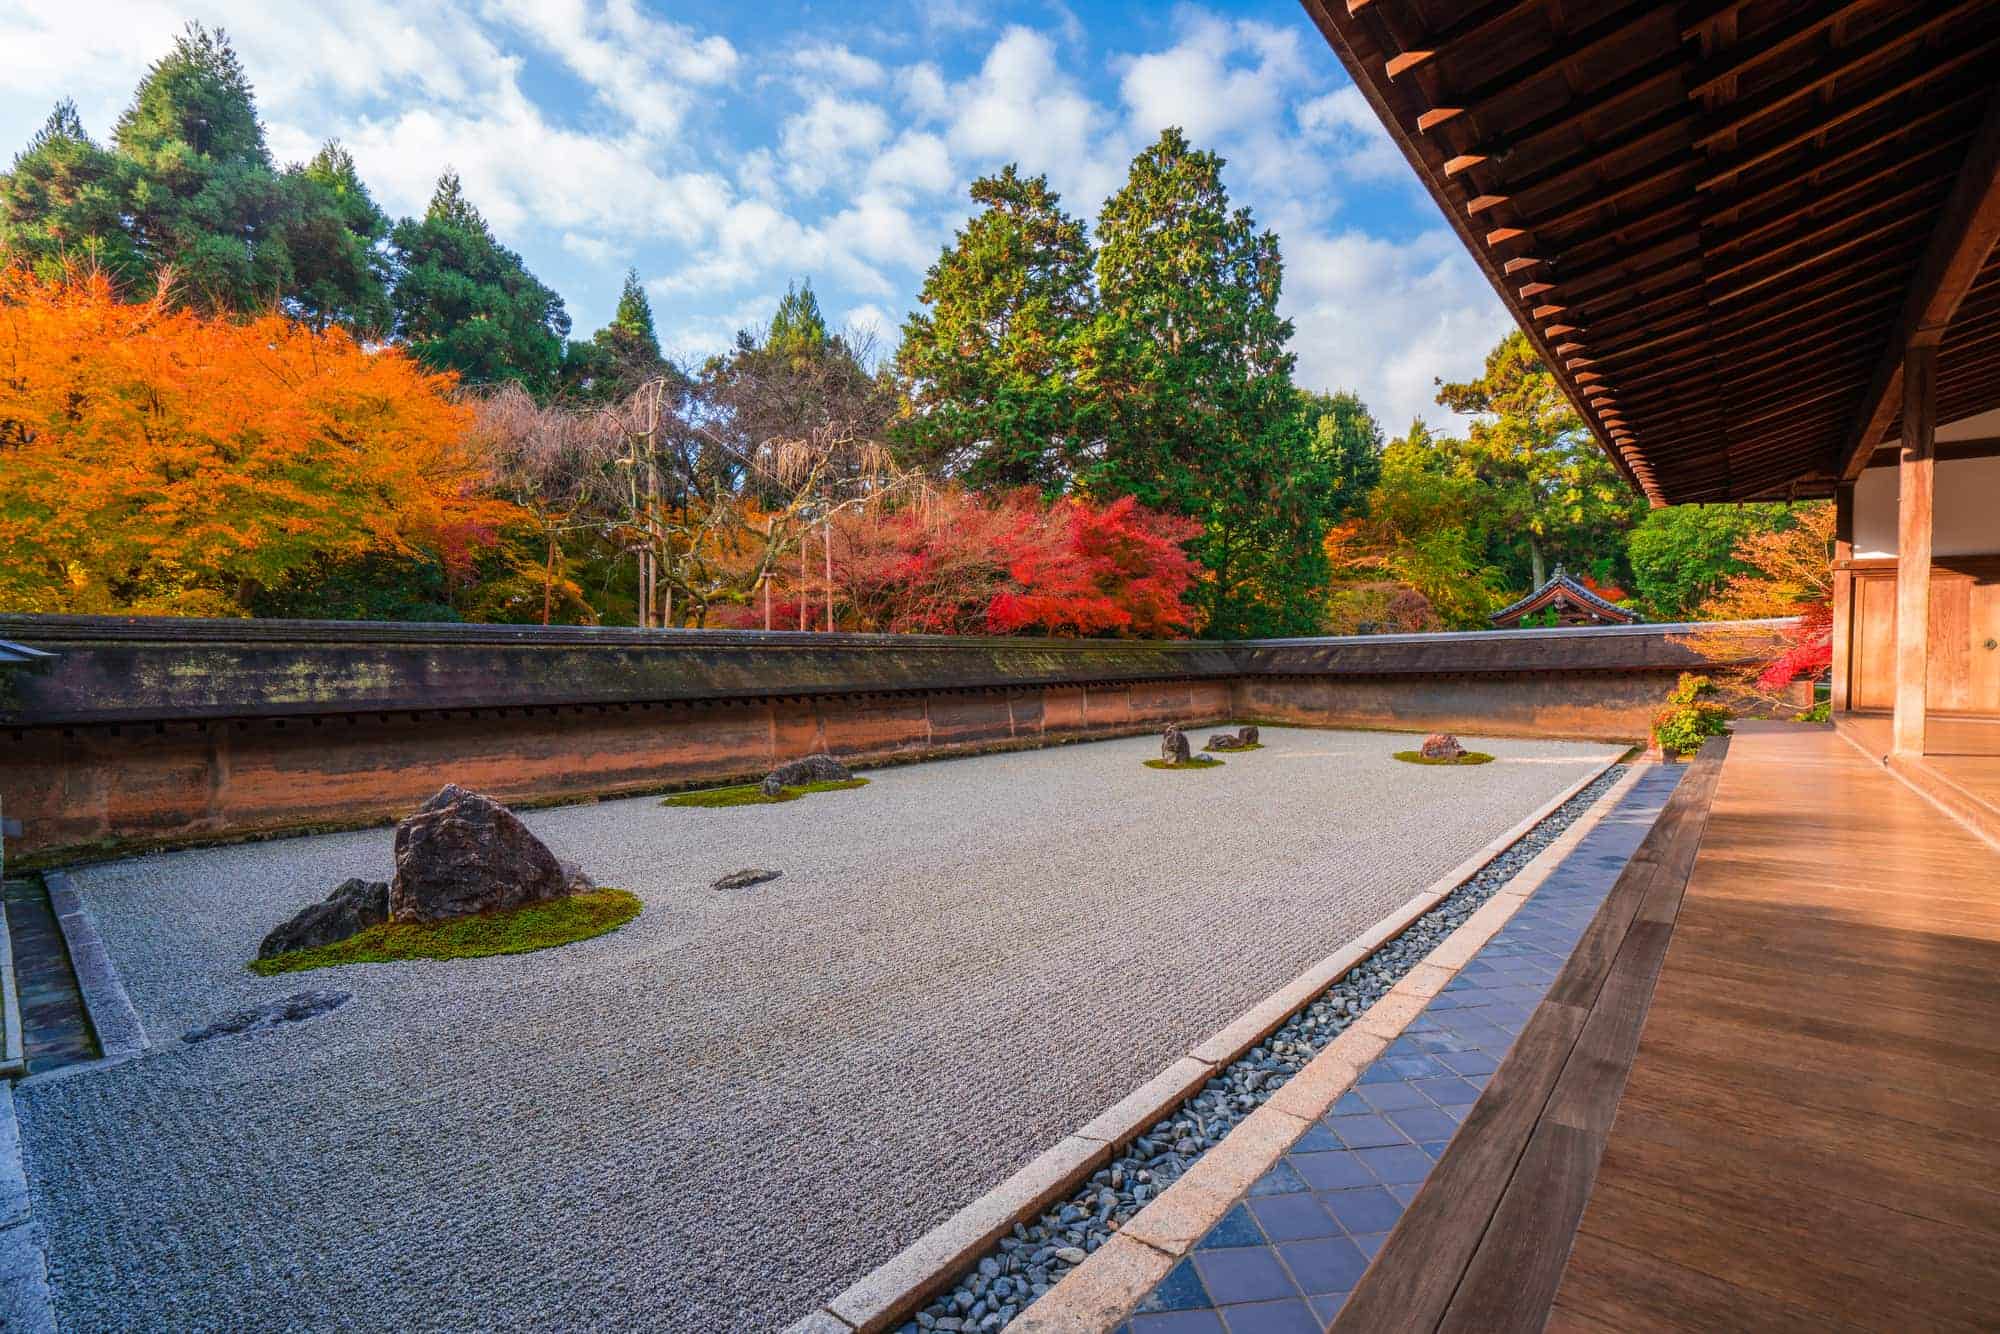 1. Ryoan-ji zen garden (kyoto, japan)